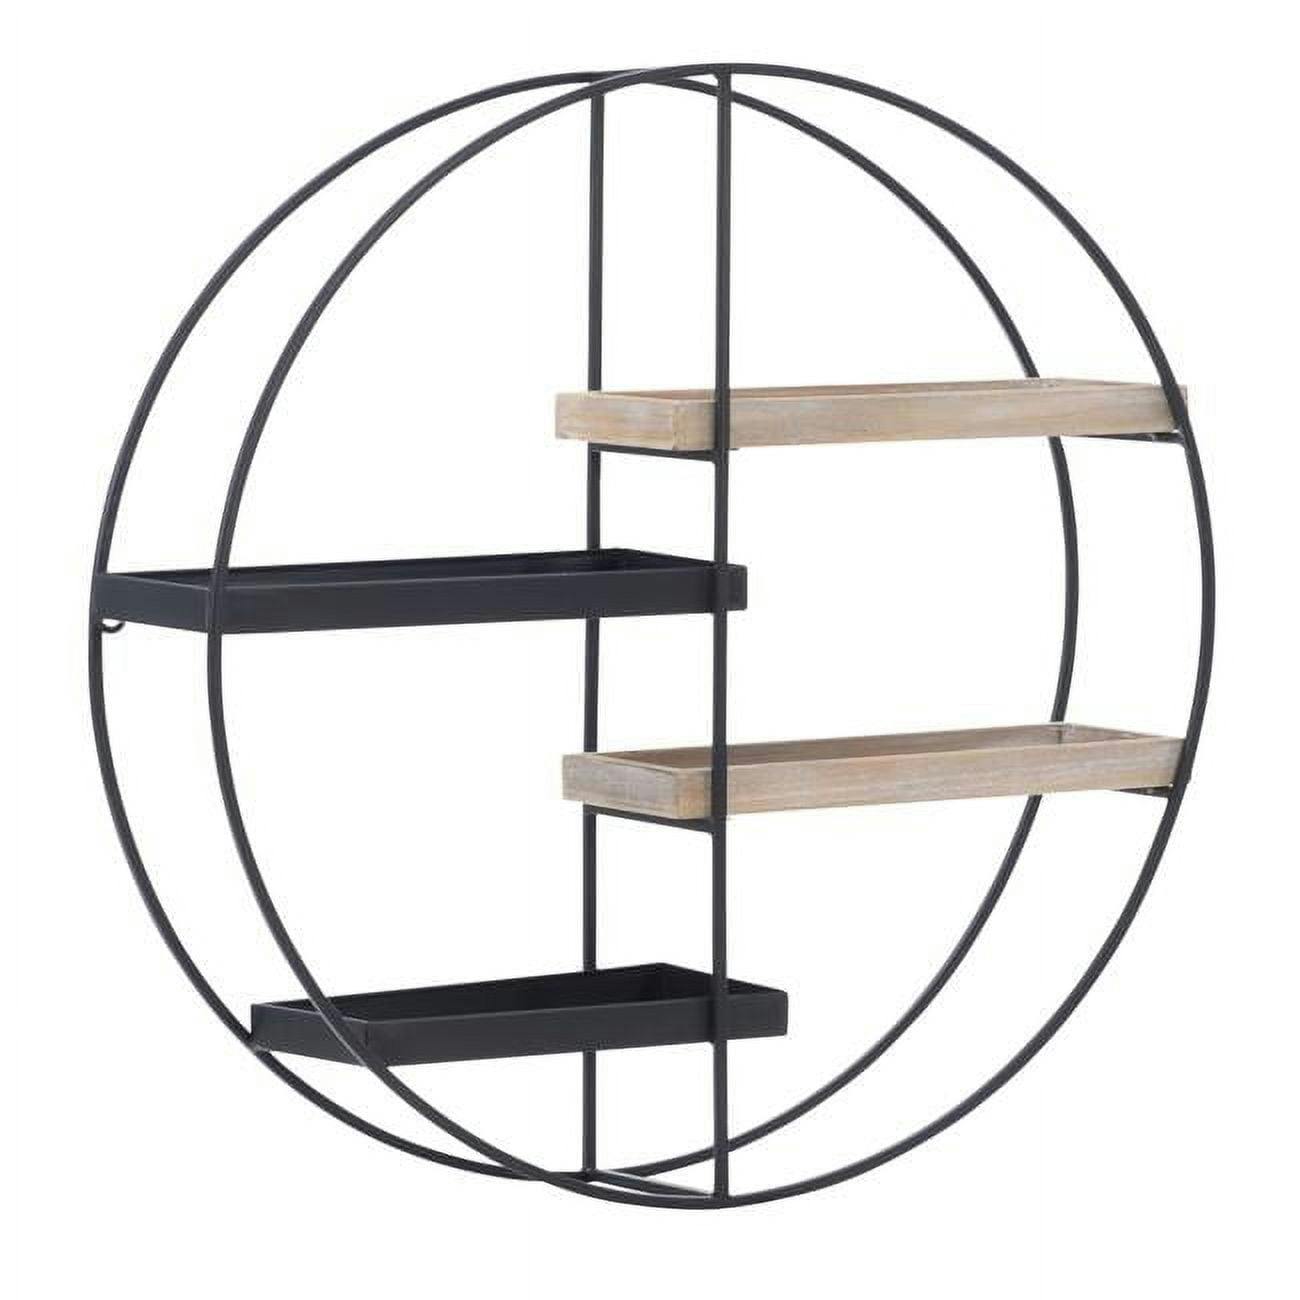 Contemporary Black Iron and Wood Circular Wall Display Shelf